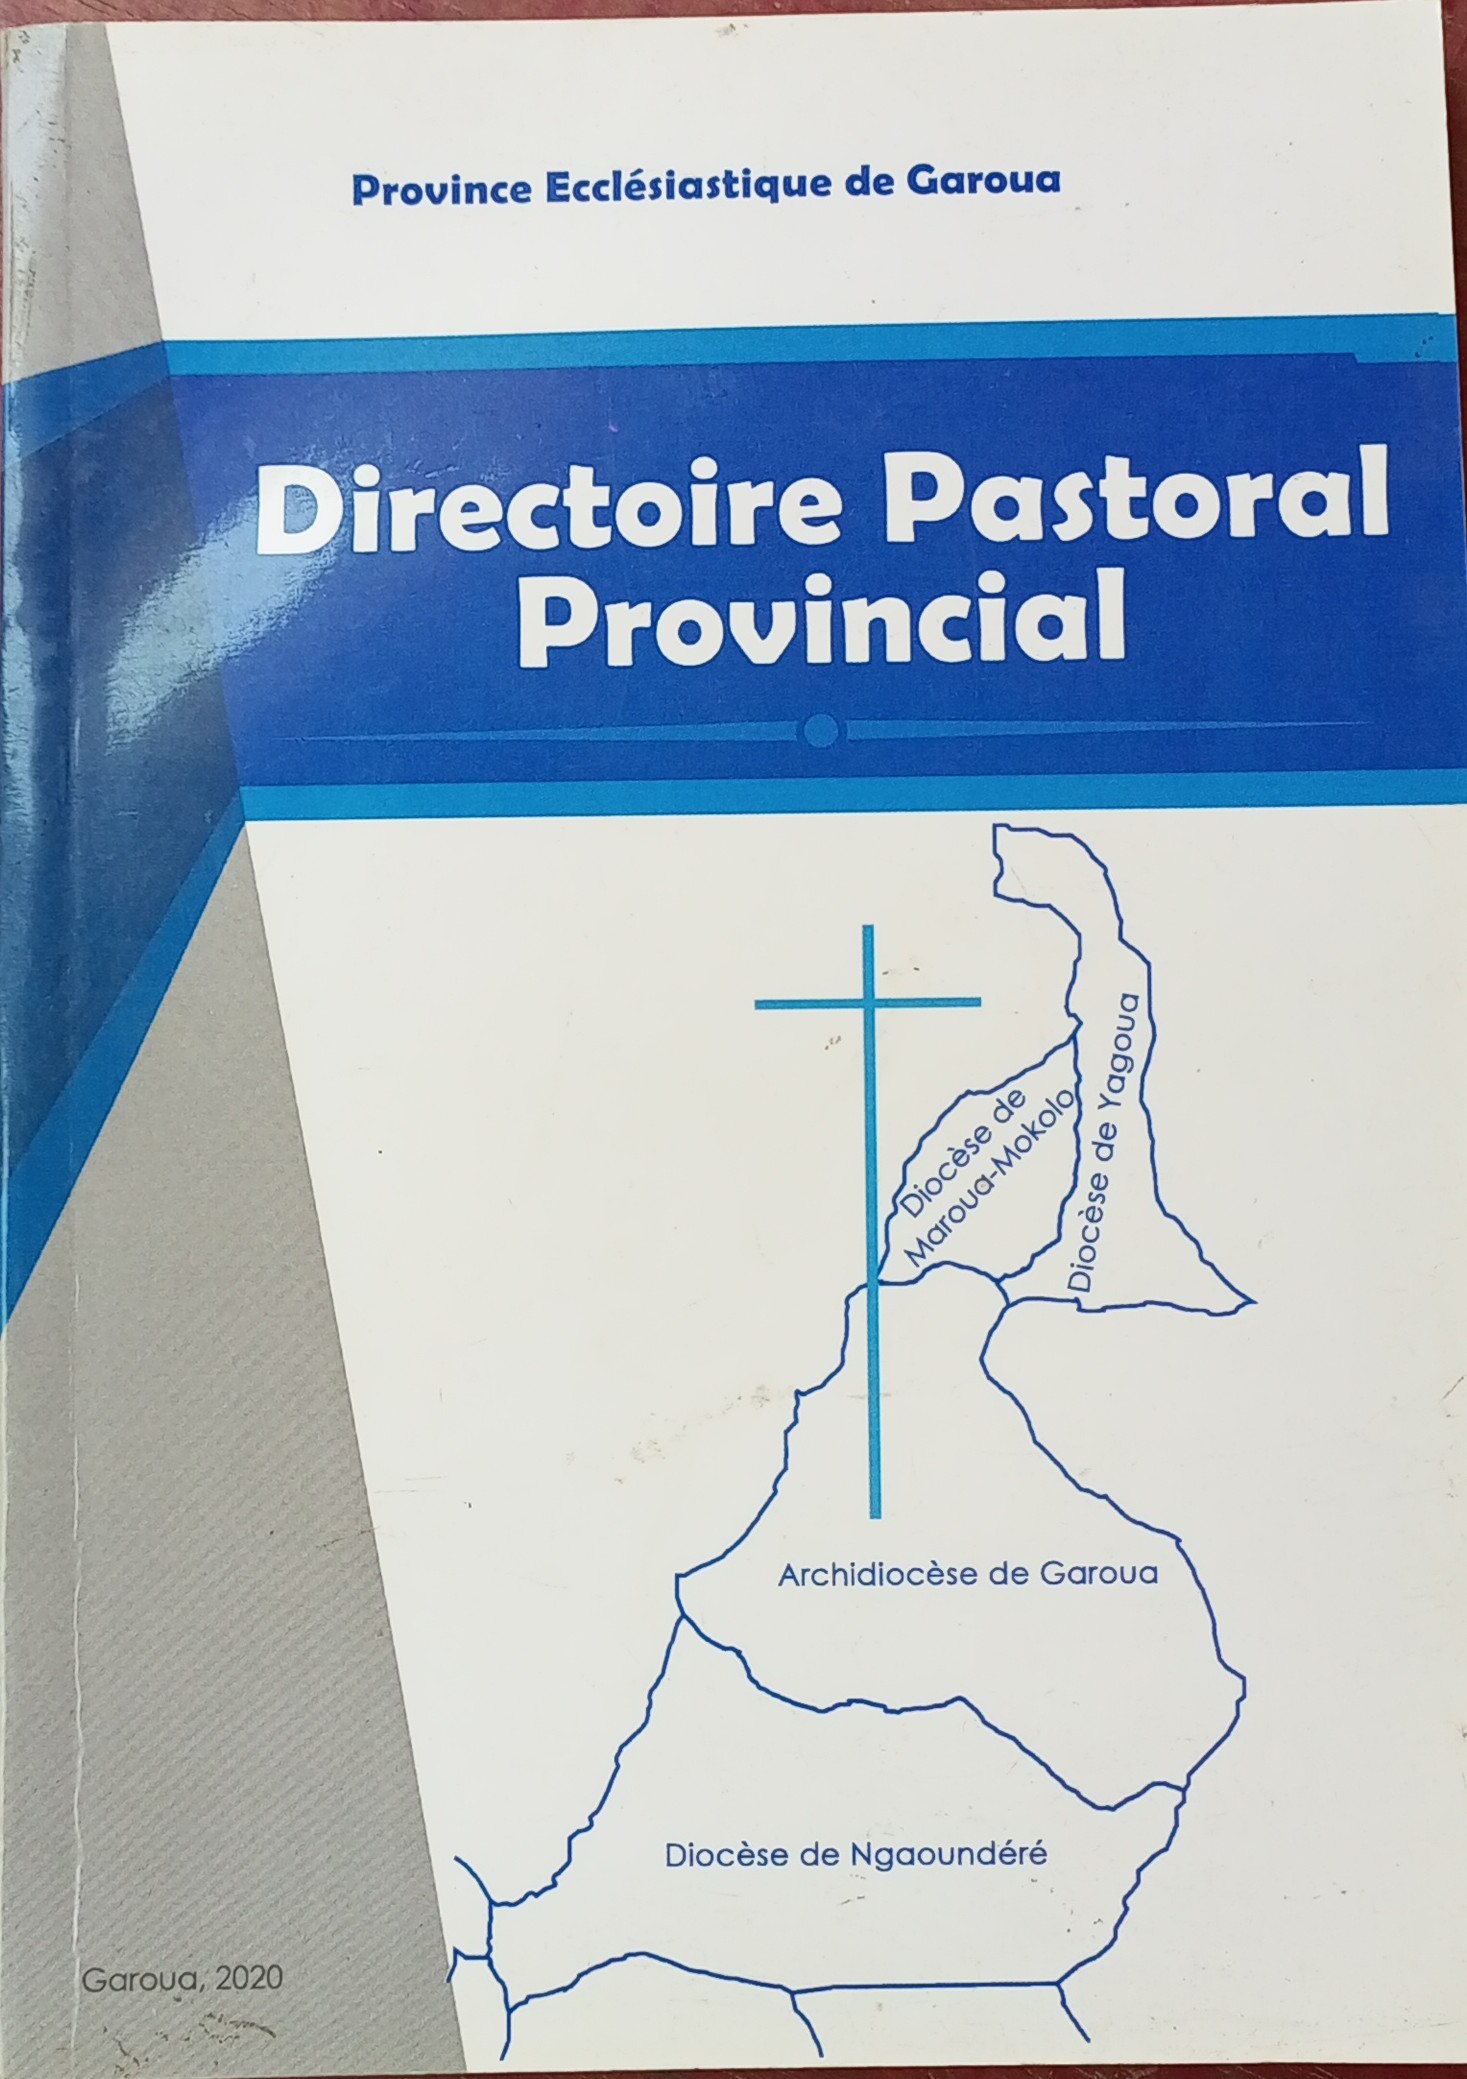 Directoire interdiocesain de la Province ecclésiastique de Garoua